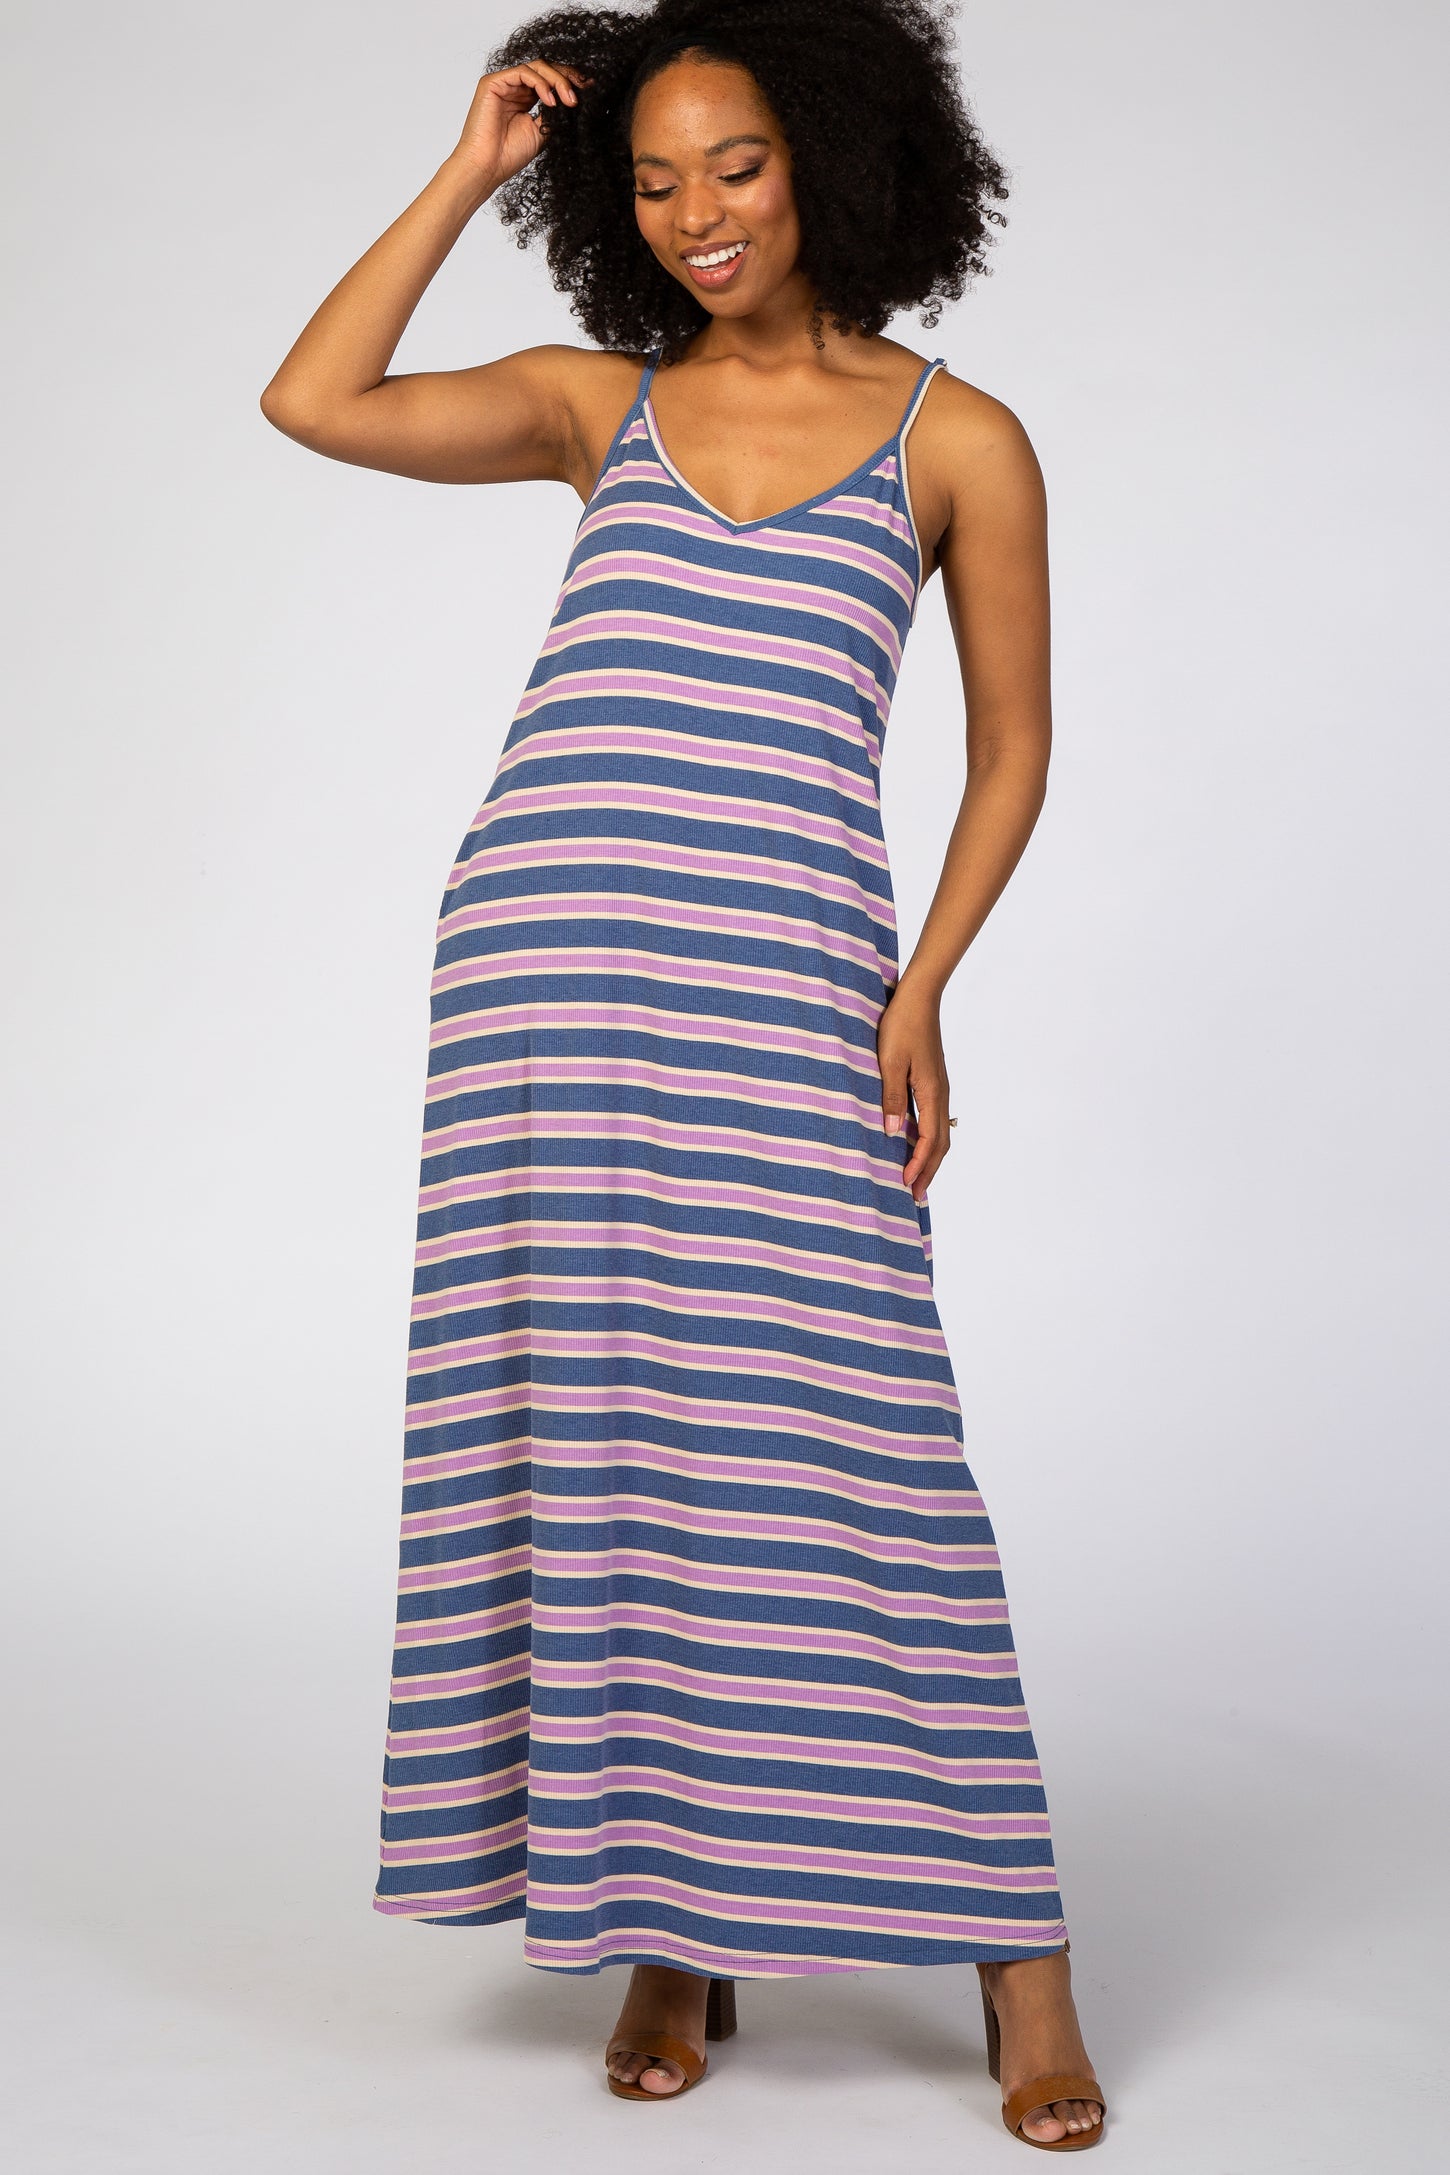 Blue Striped Maternity Maxi Dress